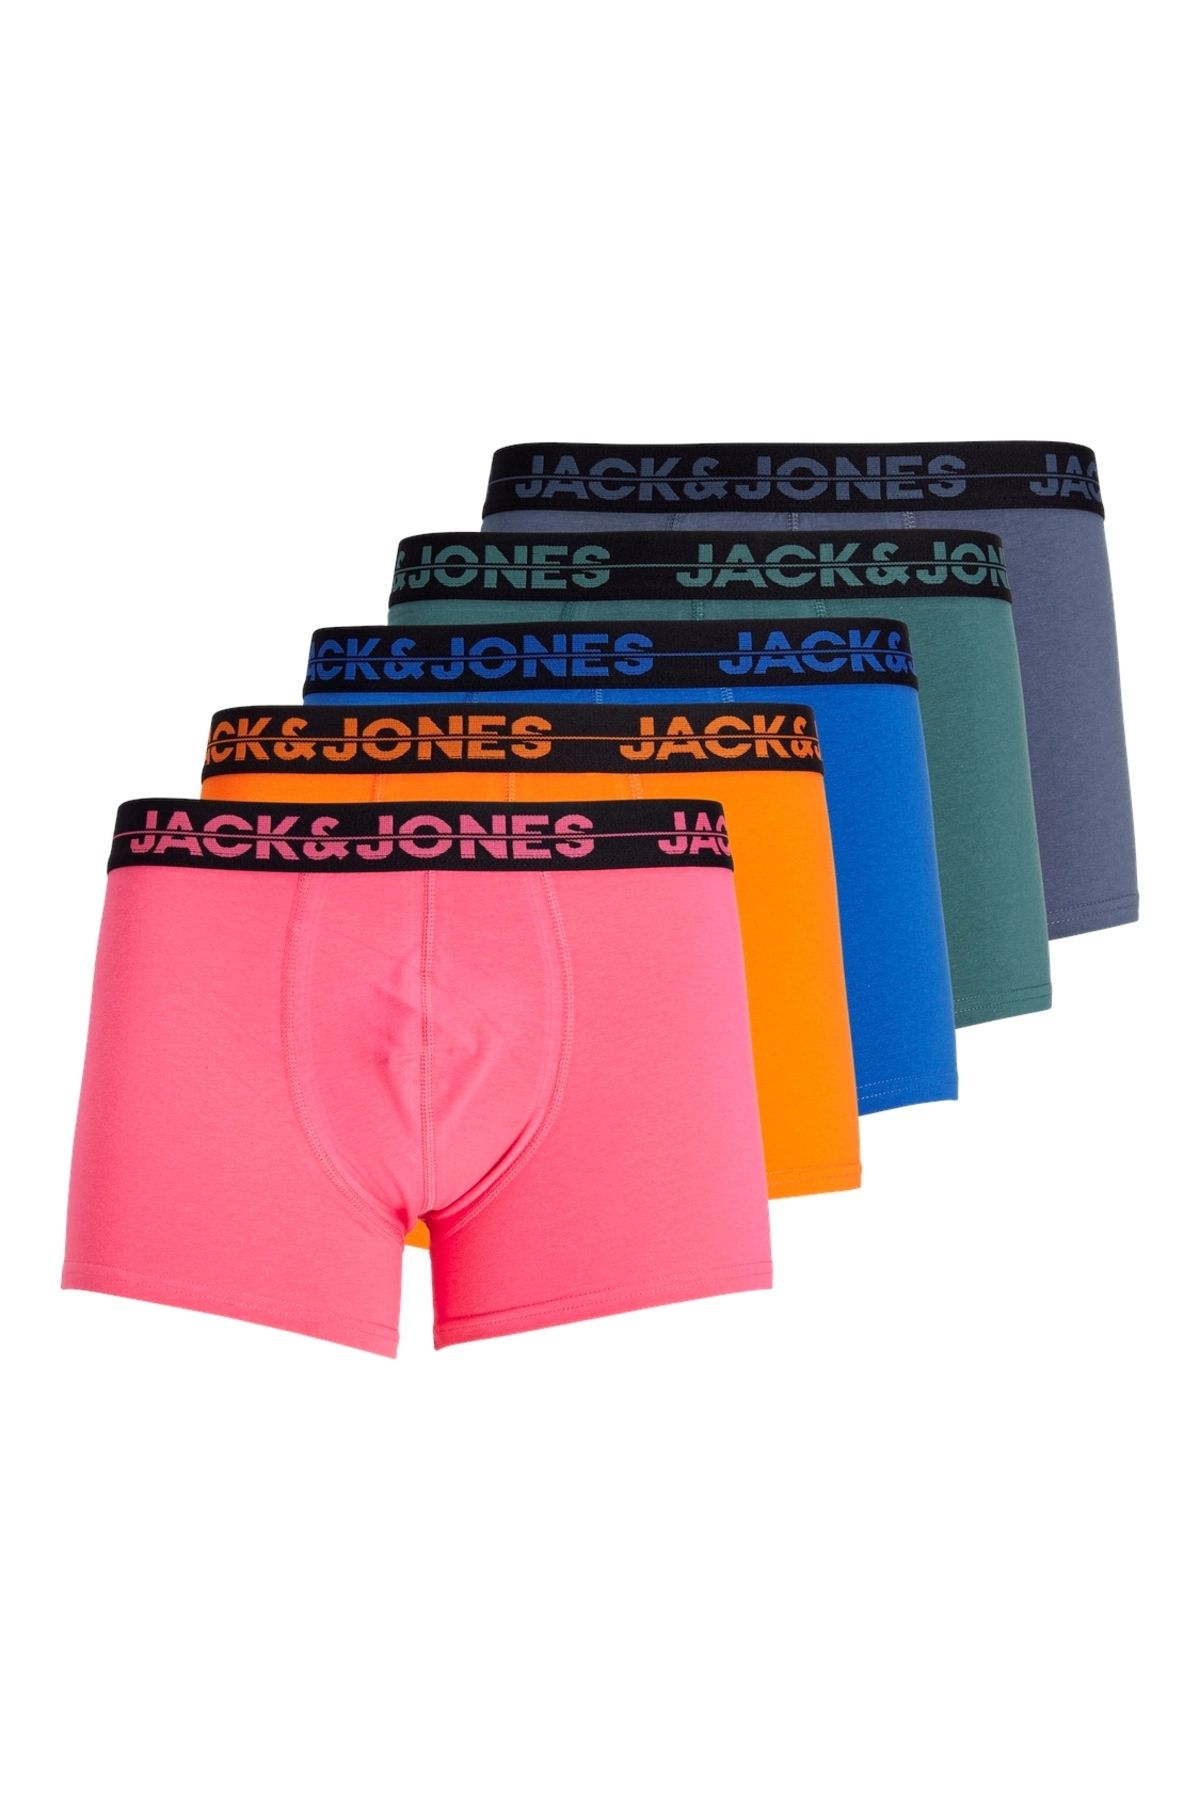 Jack & Jones Jack Jones Jacseth Solıd Trunks 5 Pack Erkek Mavi Boxer 12251418-07